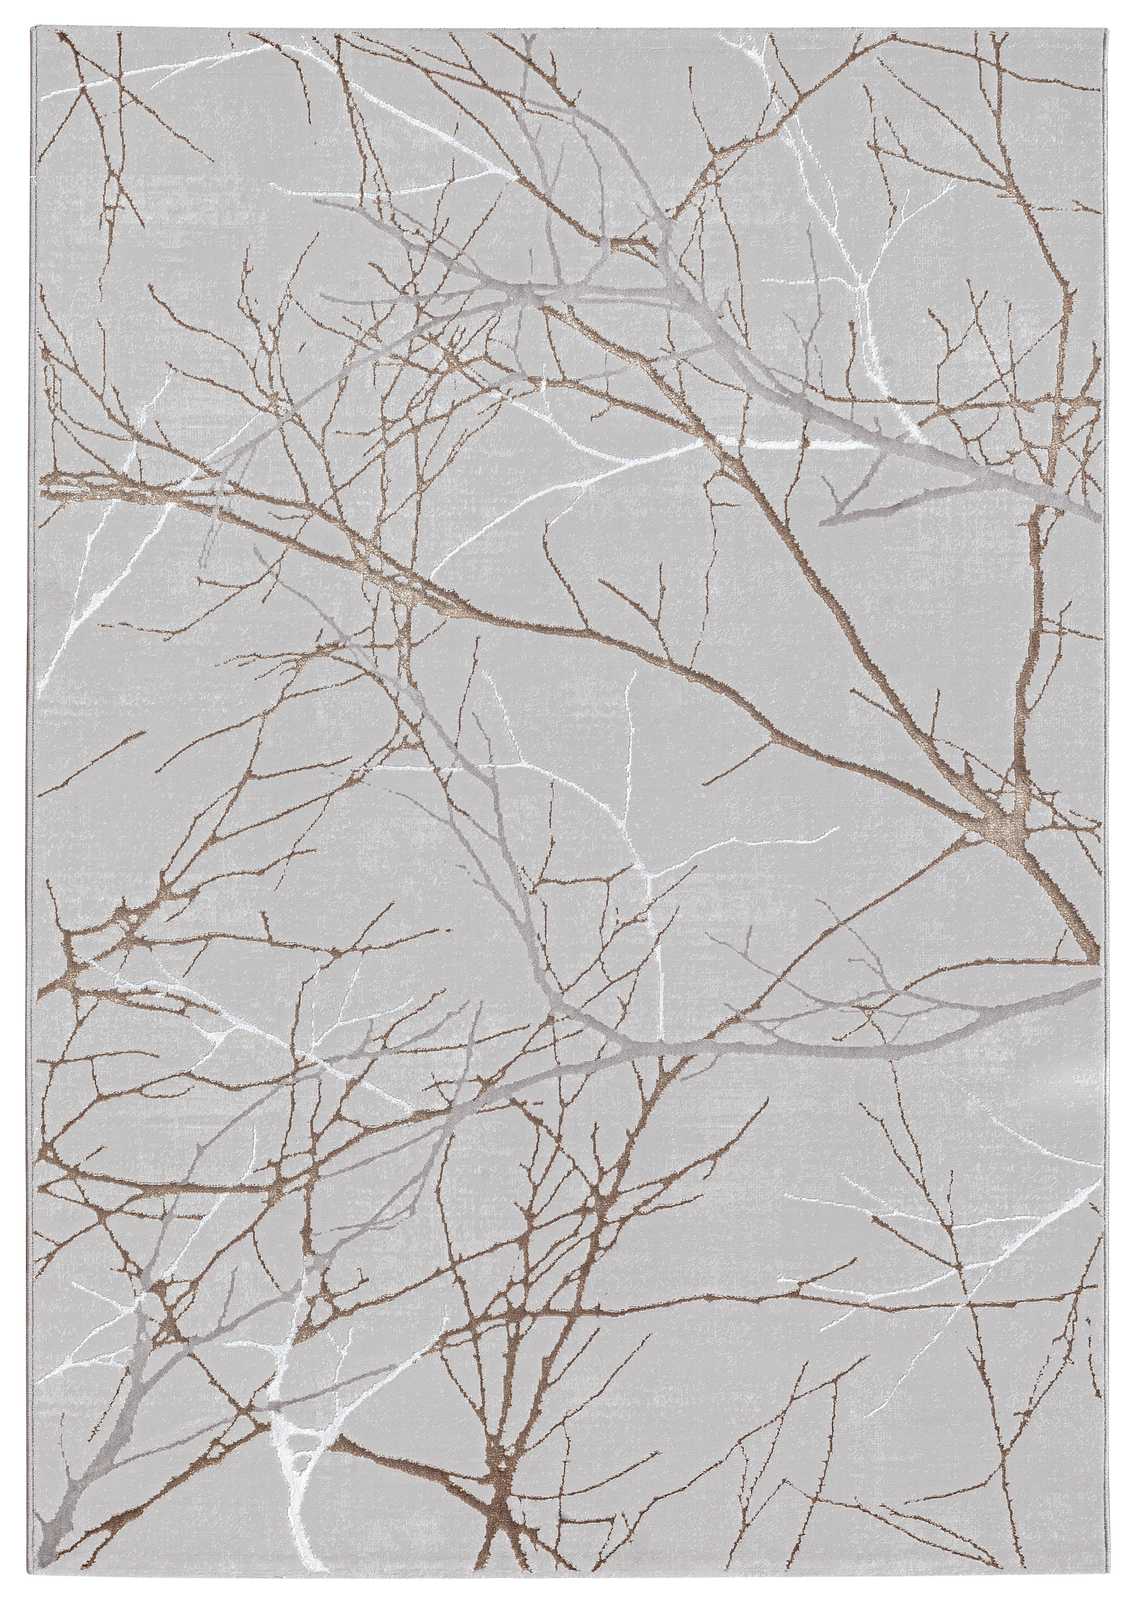             Bemusterter Hochflor Teppich in Grau – 200 x 140 cm
        